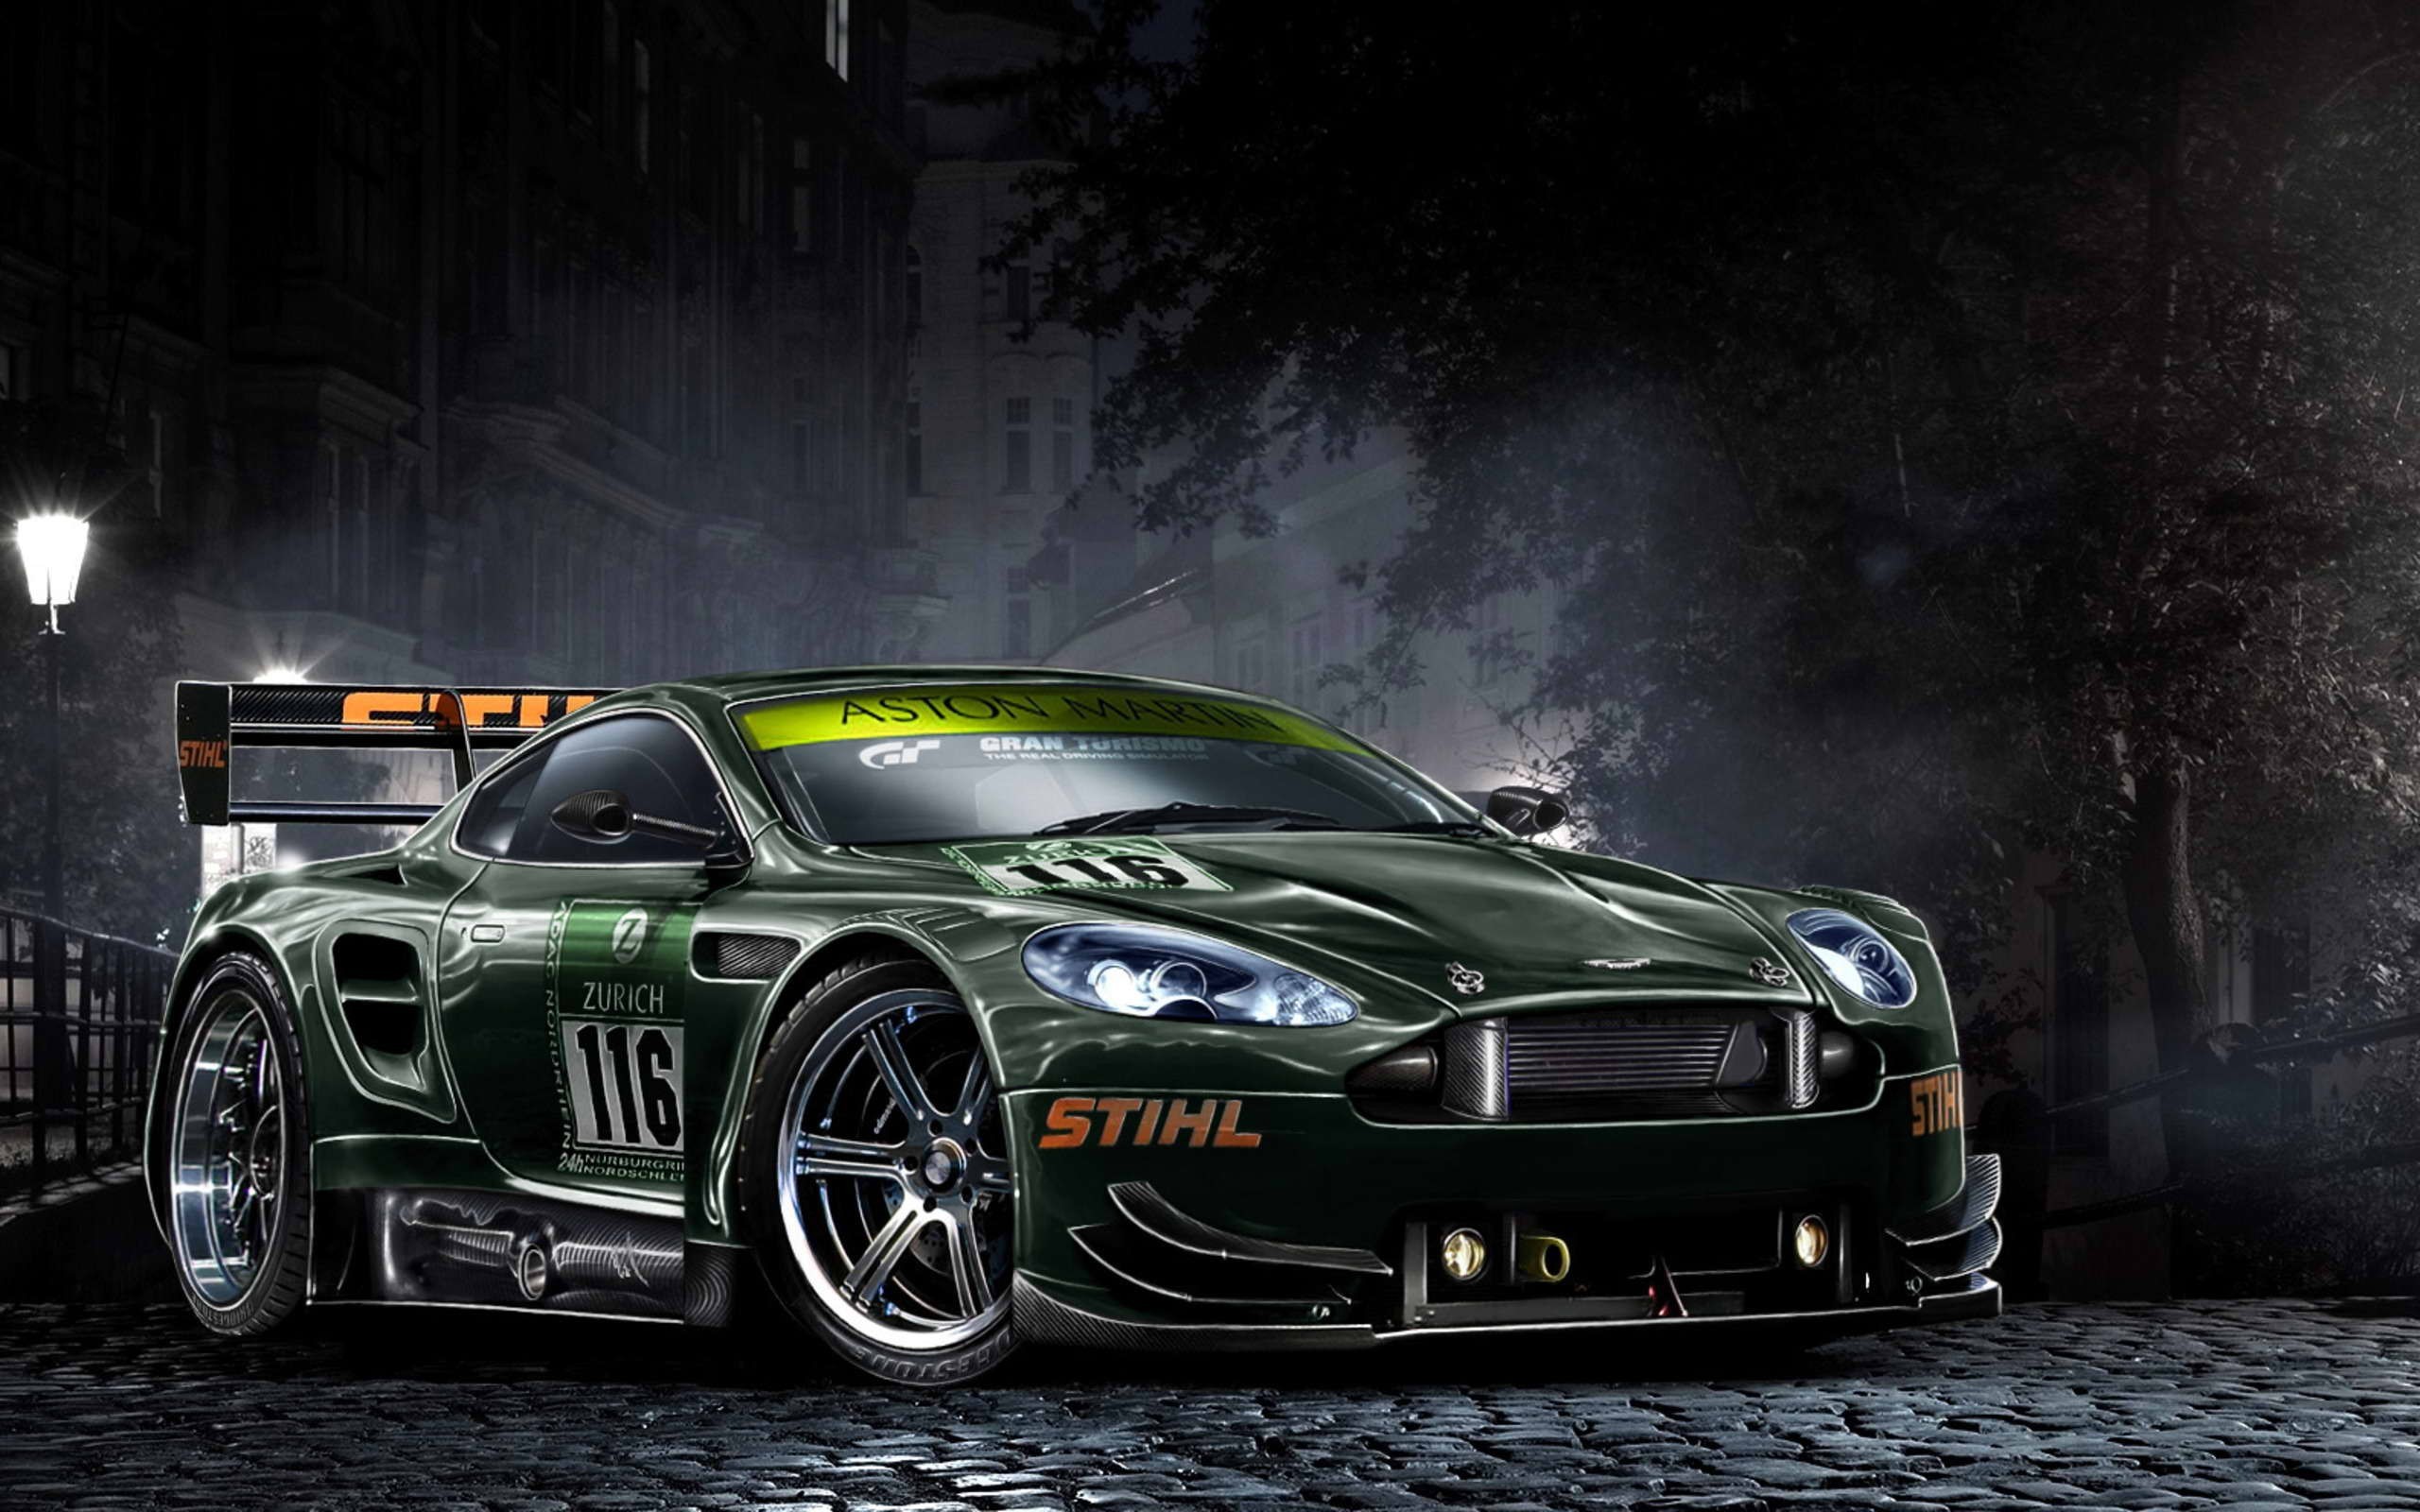 2560x1600 ... Street Racing Cars Wallpapers - Auto Datz ...